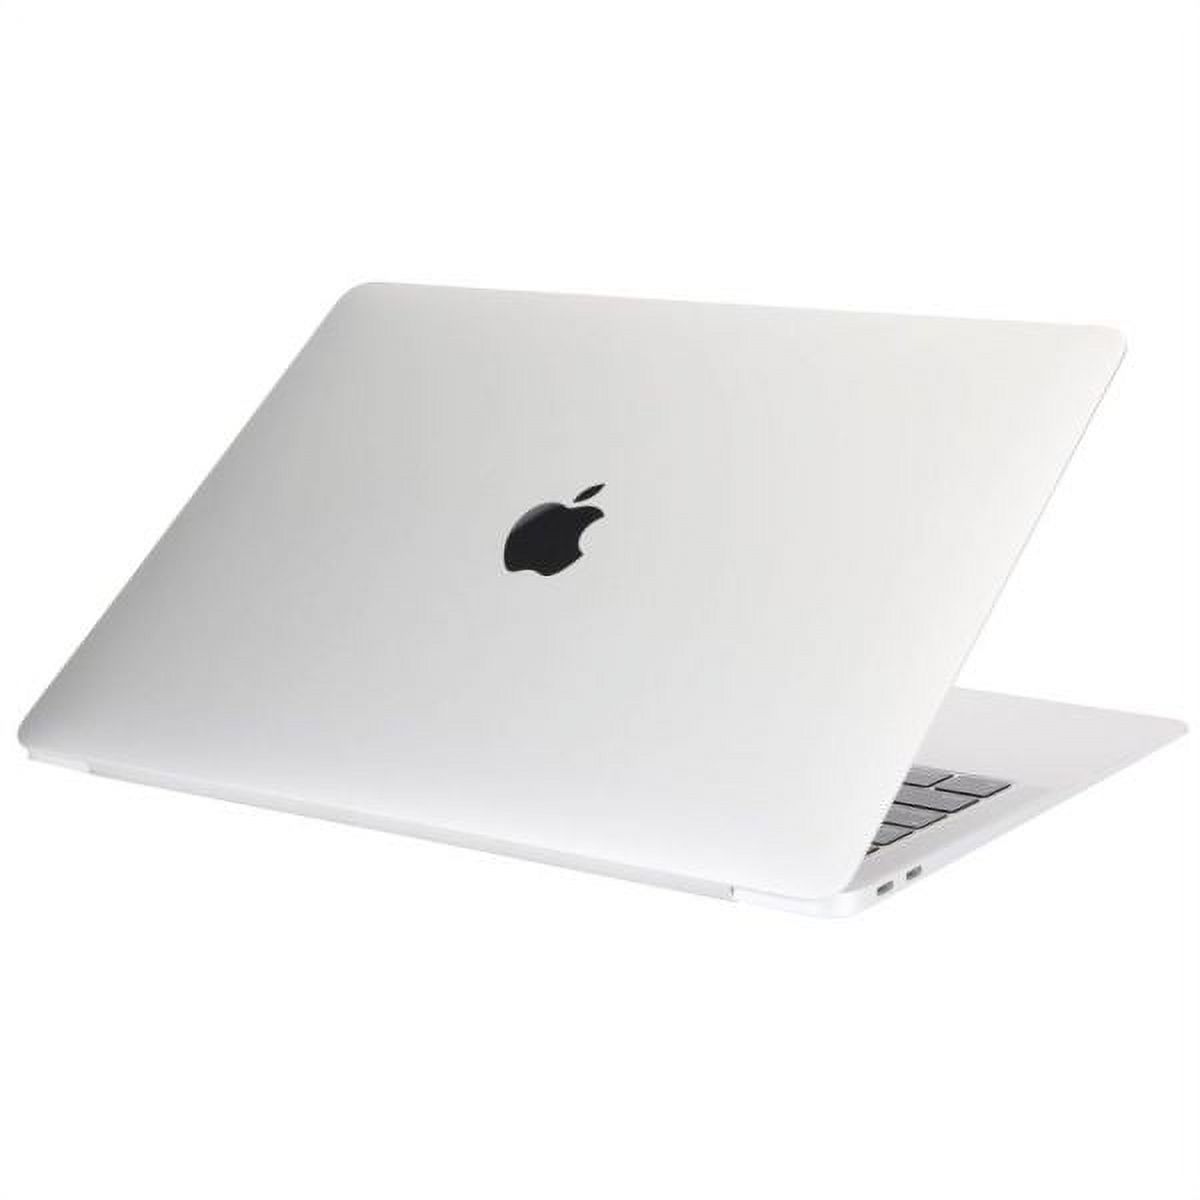 Open Box Apple MacBook Air Laptop, 13.3" Retina Display, Intel Core i5, 8GB RAM, 256GB SSD, Mac OS, Silver, MREC2LL/A - image 2 of 2